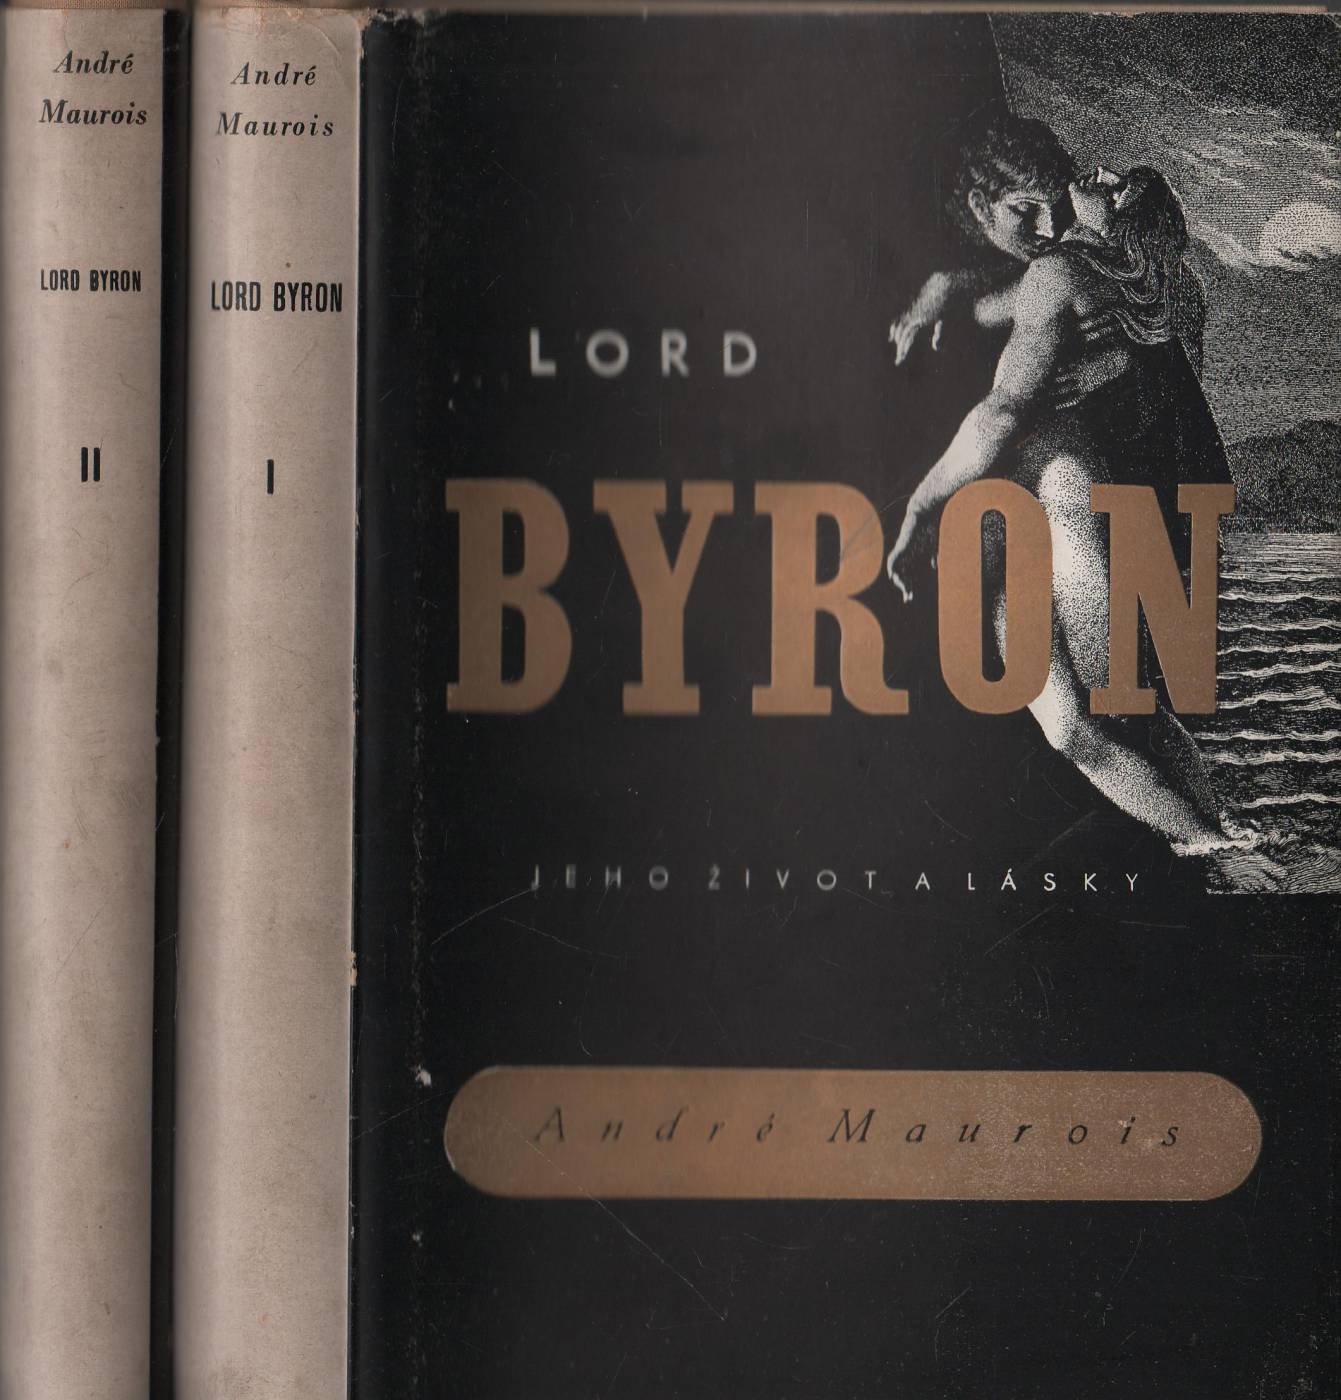 Maurois, André – Lord Byron - Jeho život a lásky